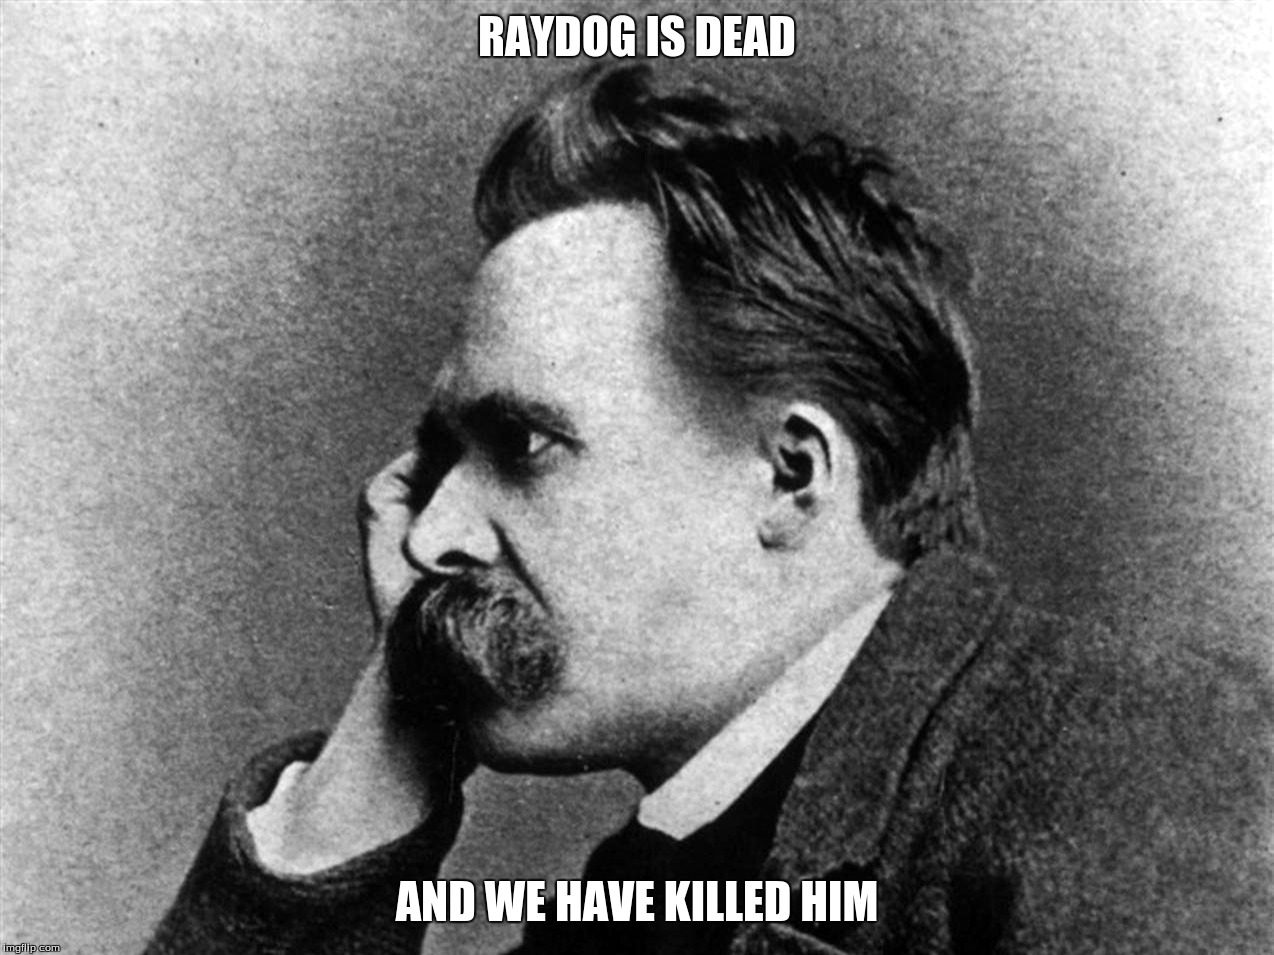 Friedrich Nietzsche | RAYDOG IS DEAD; AND WE HAVE KILLED HIM | image tagged in god is dead,friedrich nietzsche,speech,raydog | made w/ Imgflip meme maker